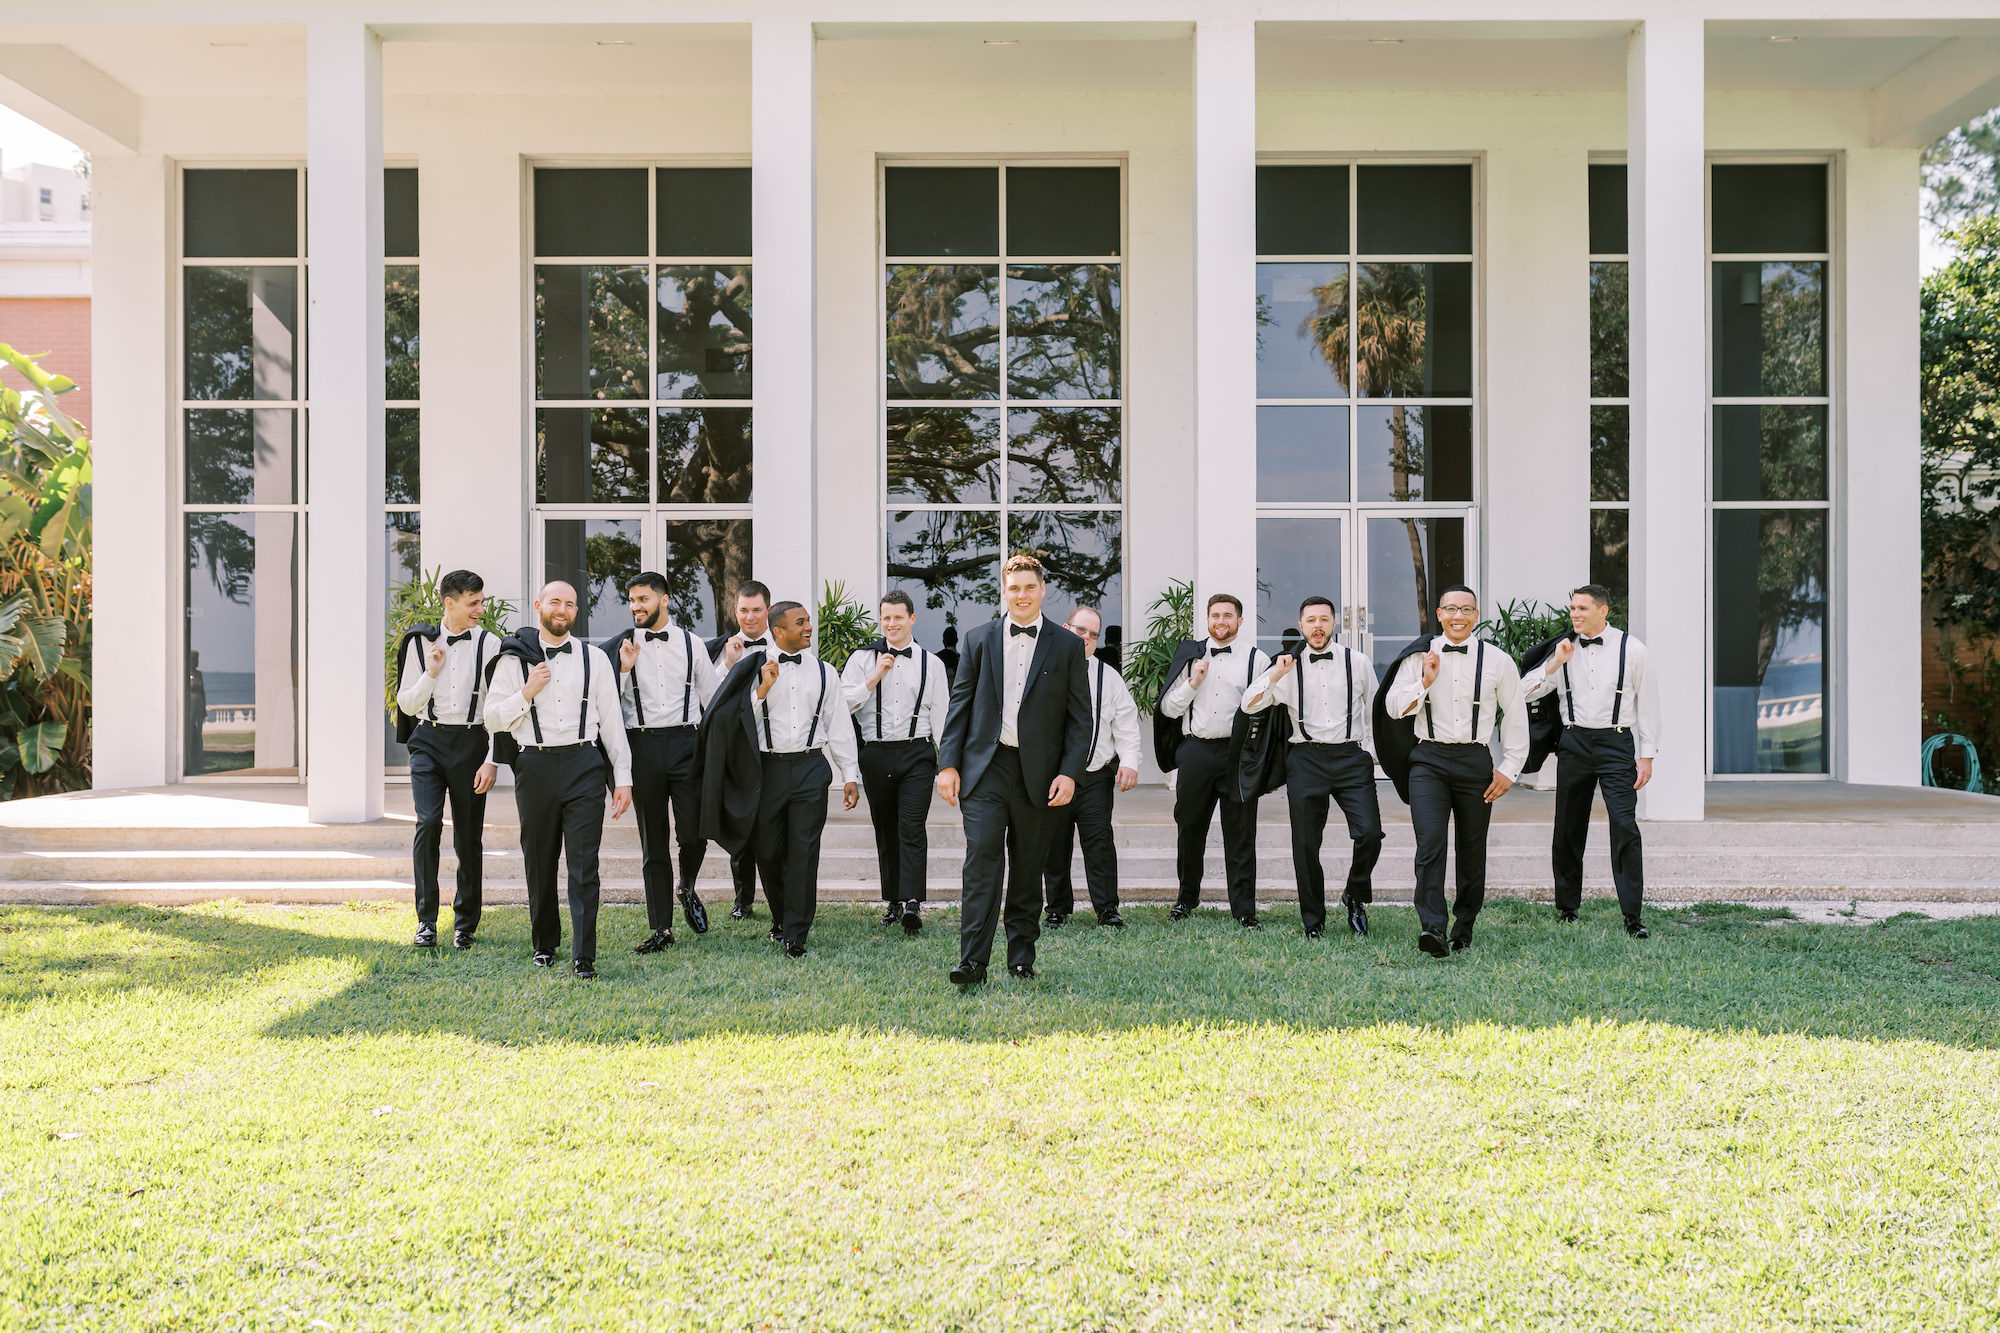 Black Tuxedo with Suspenders and Bowties | Groomsmen Wedding Attire Inspiration | Tampa Bay Wedding Venue Tampa Garden Club